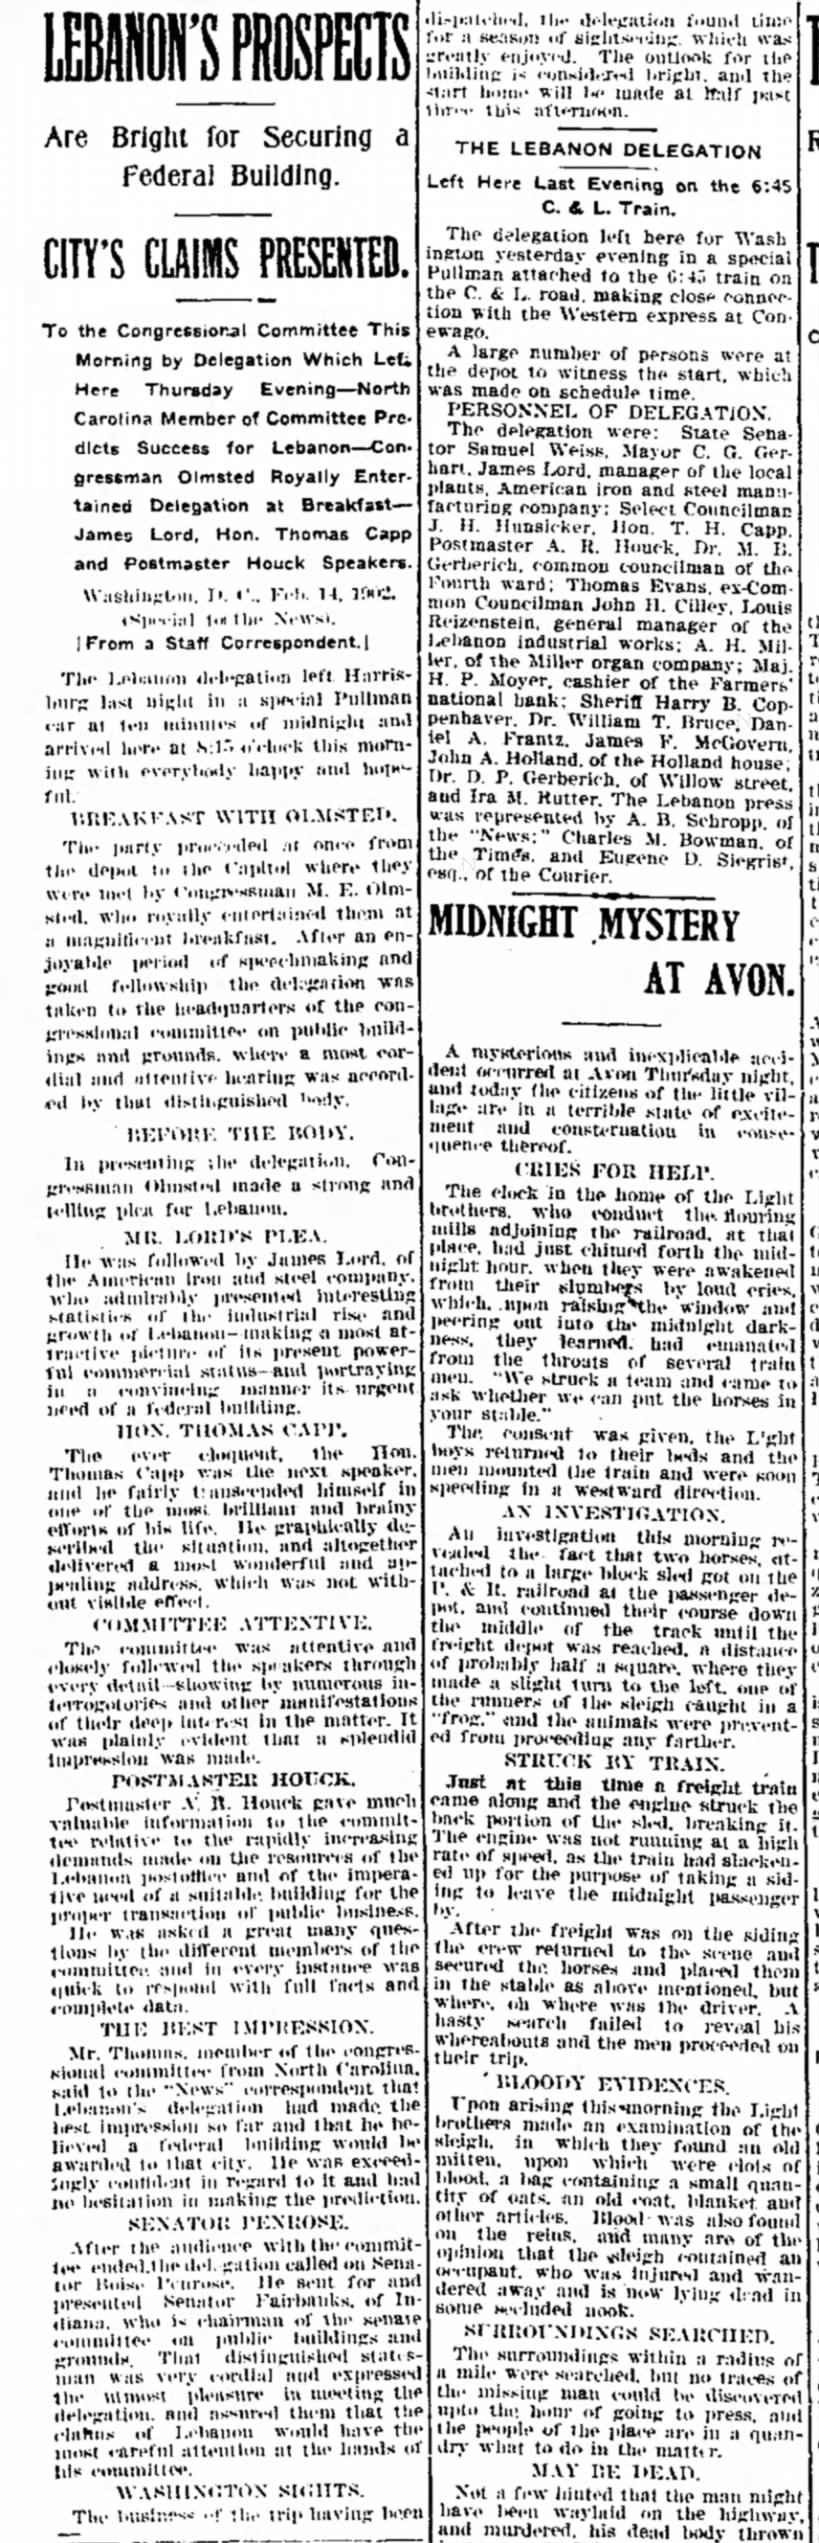 Lebanon Daily News Feb 14, 1902  Lebanon prospects